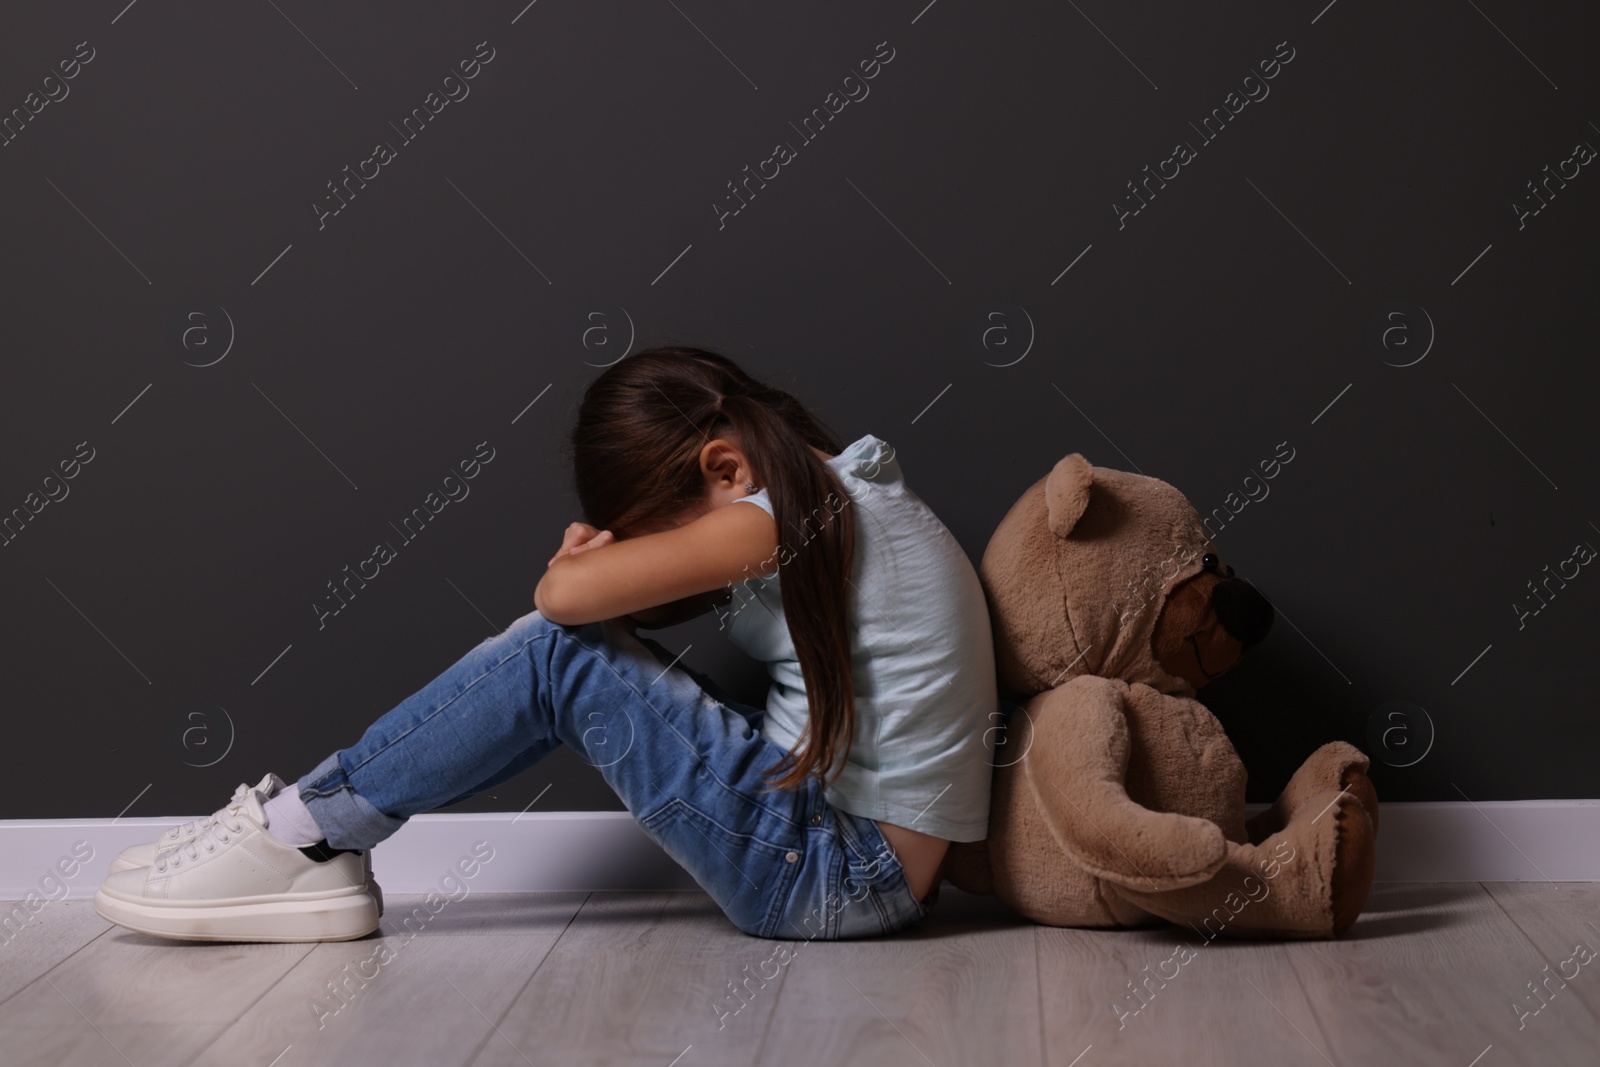 Photo of Child abuse. Upset little girl with teddy bear sitting on floor near gray wall indoors